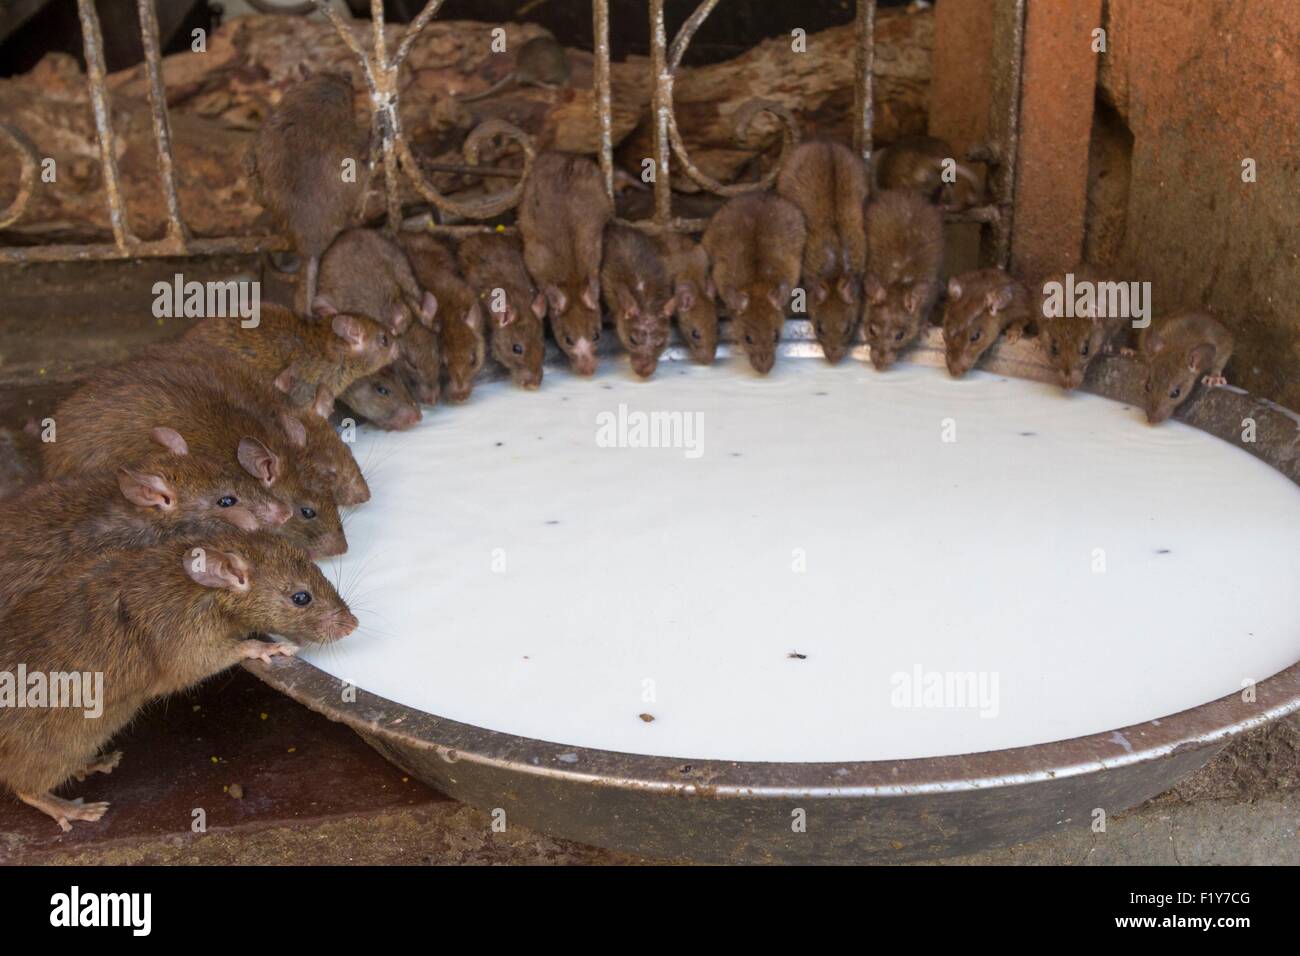 India, Rajasthan State, Deshnok, Karni Mata Temple or Rat Temple, milk offered to rats Stock Photo